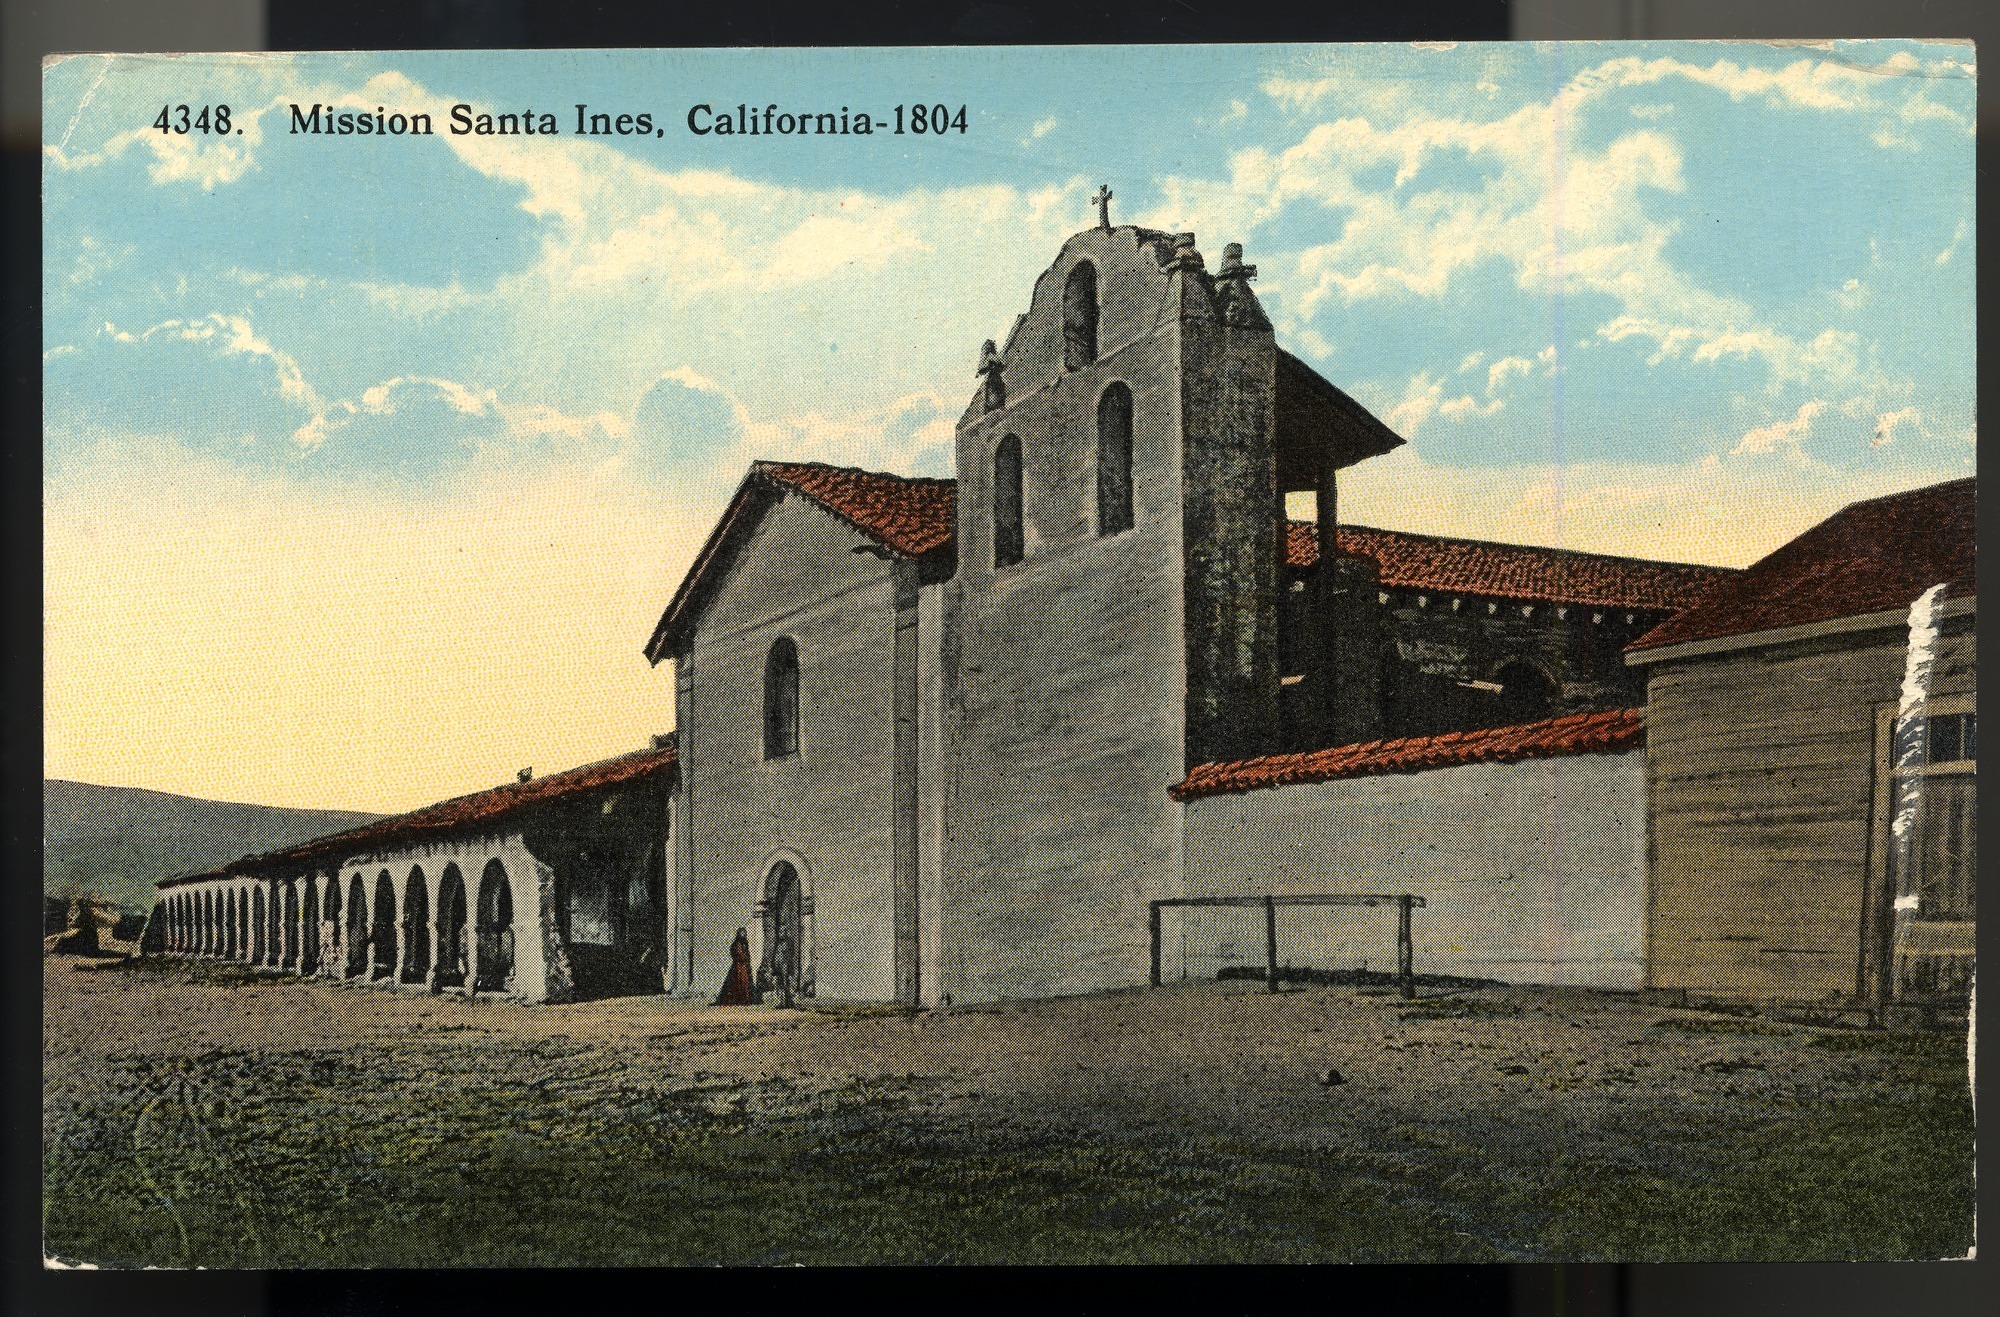 Postcard 59 – Mission Santa Inés, California - 1804. I. L. Eno Company. Curt Teich Company. ca 1914. NMAH 1986.0639.0321.